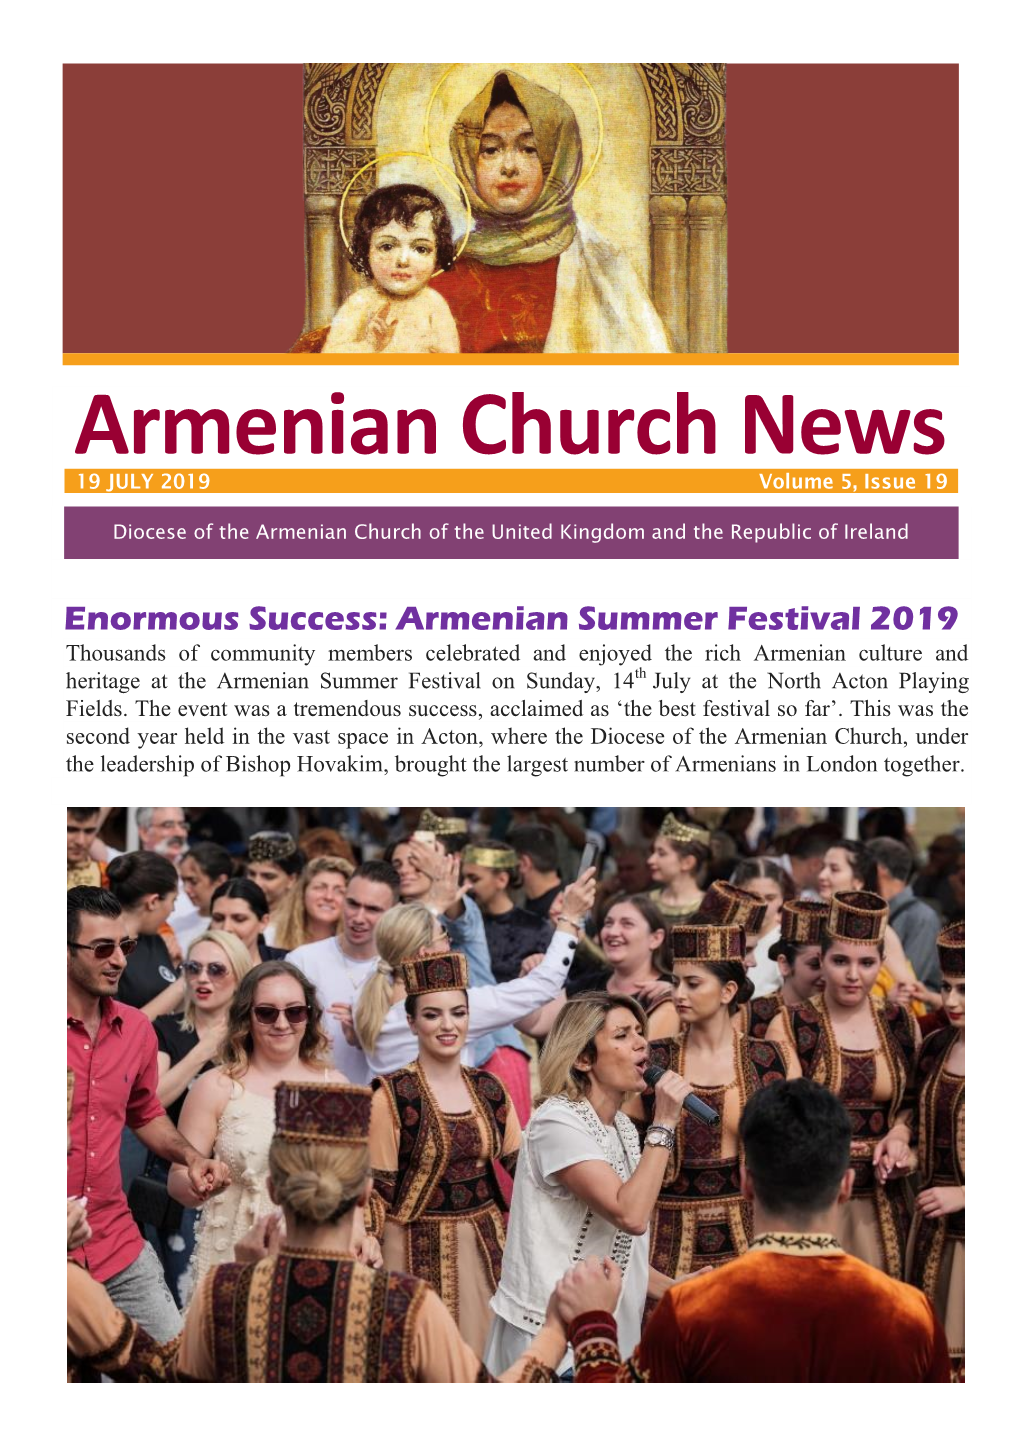 Armenian Church News 19 JULY 2019 Volume 5, Issue 19